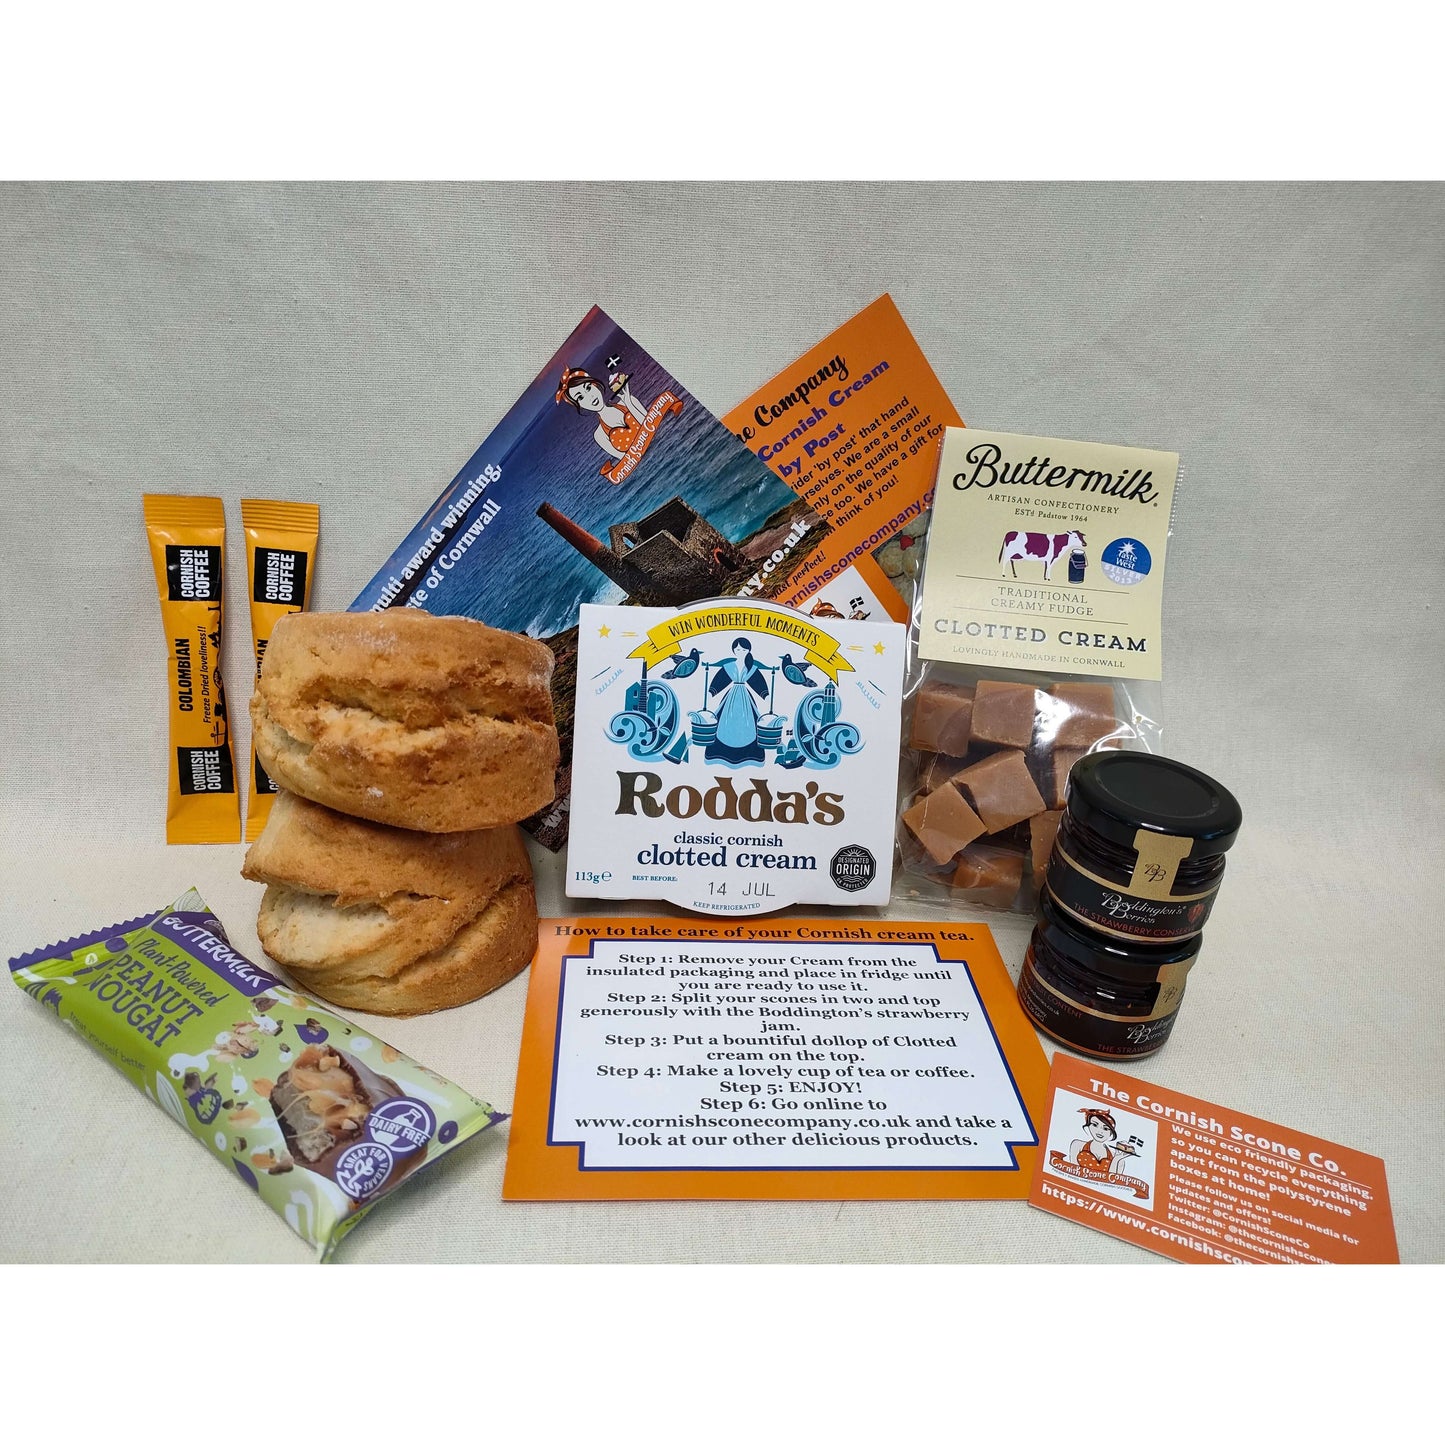 Gluten Free Mixed box - The Cornish Scone Company